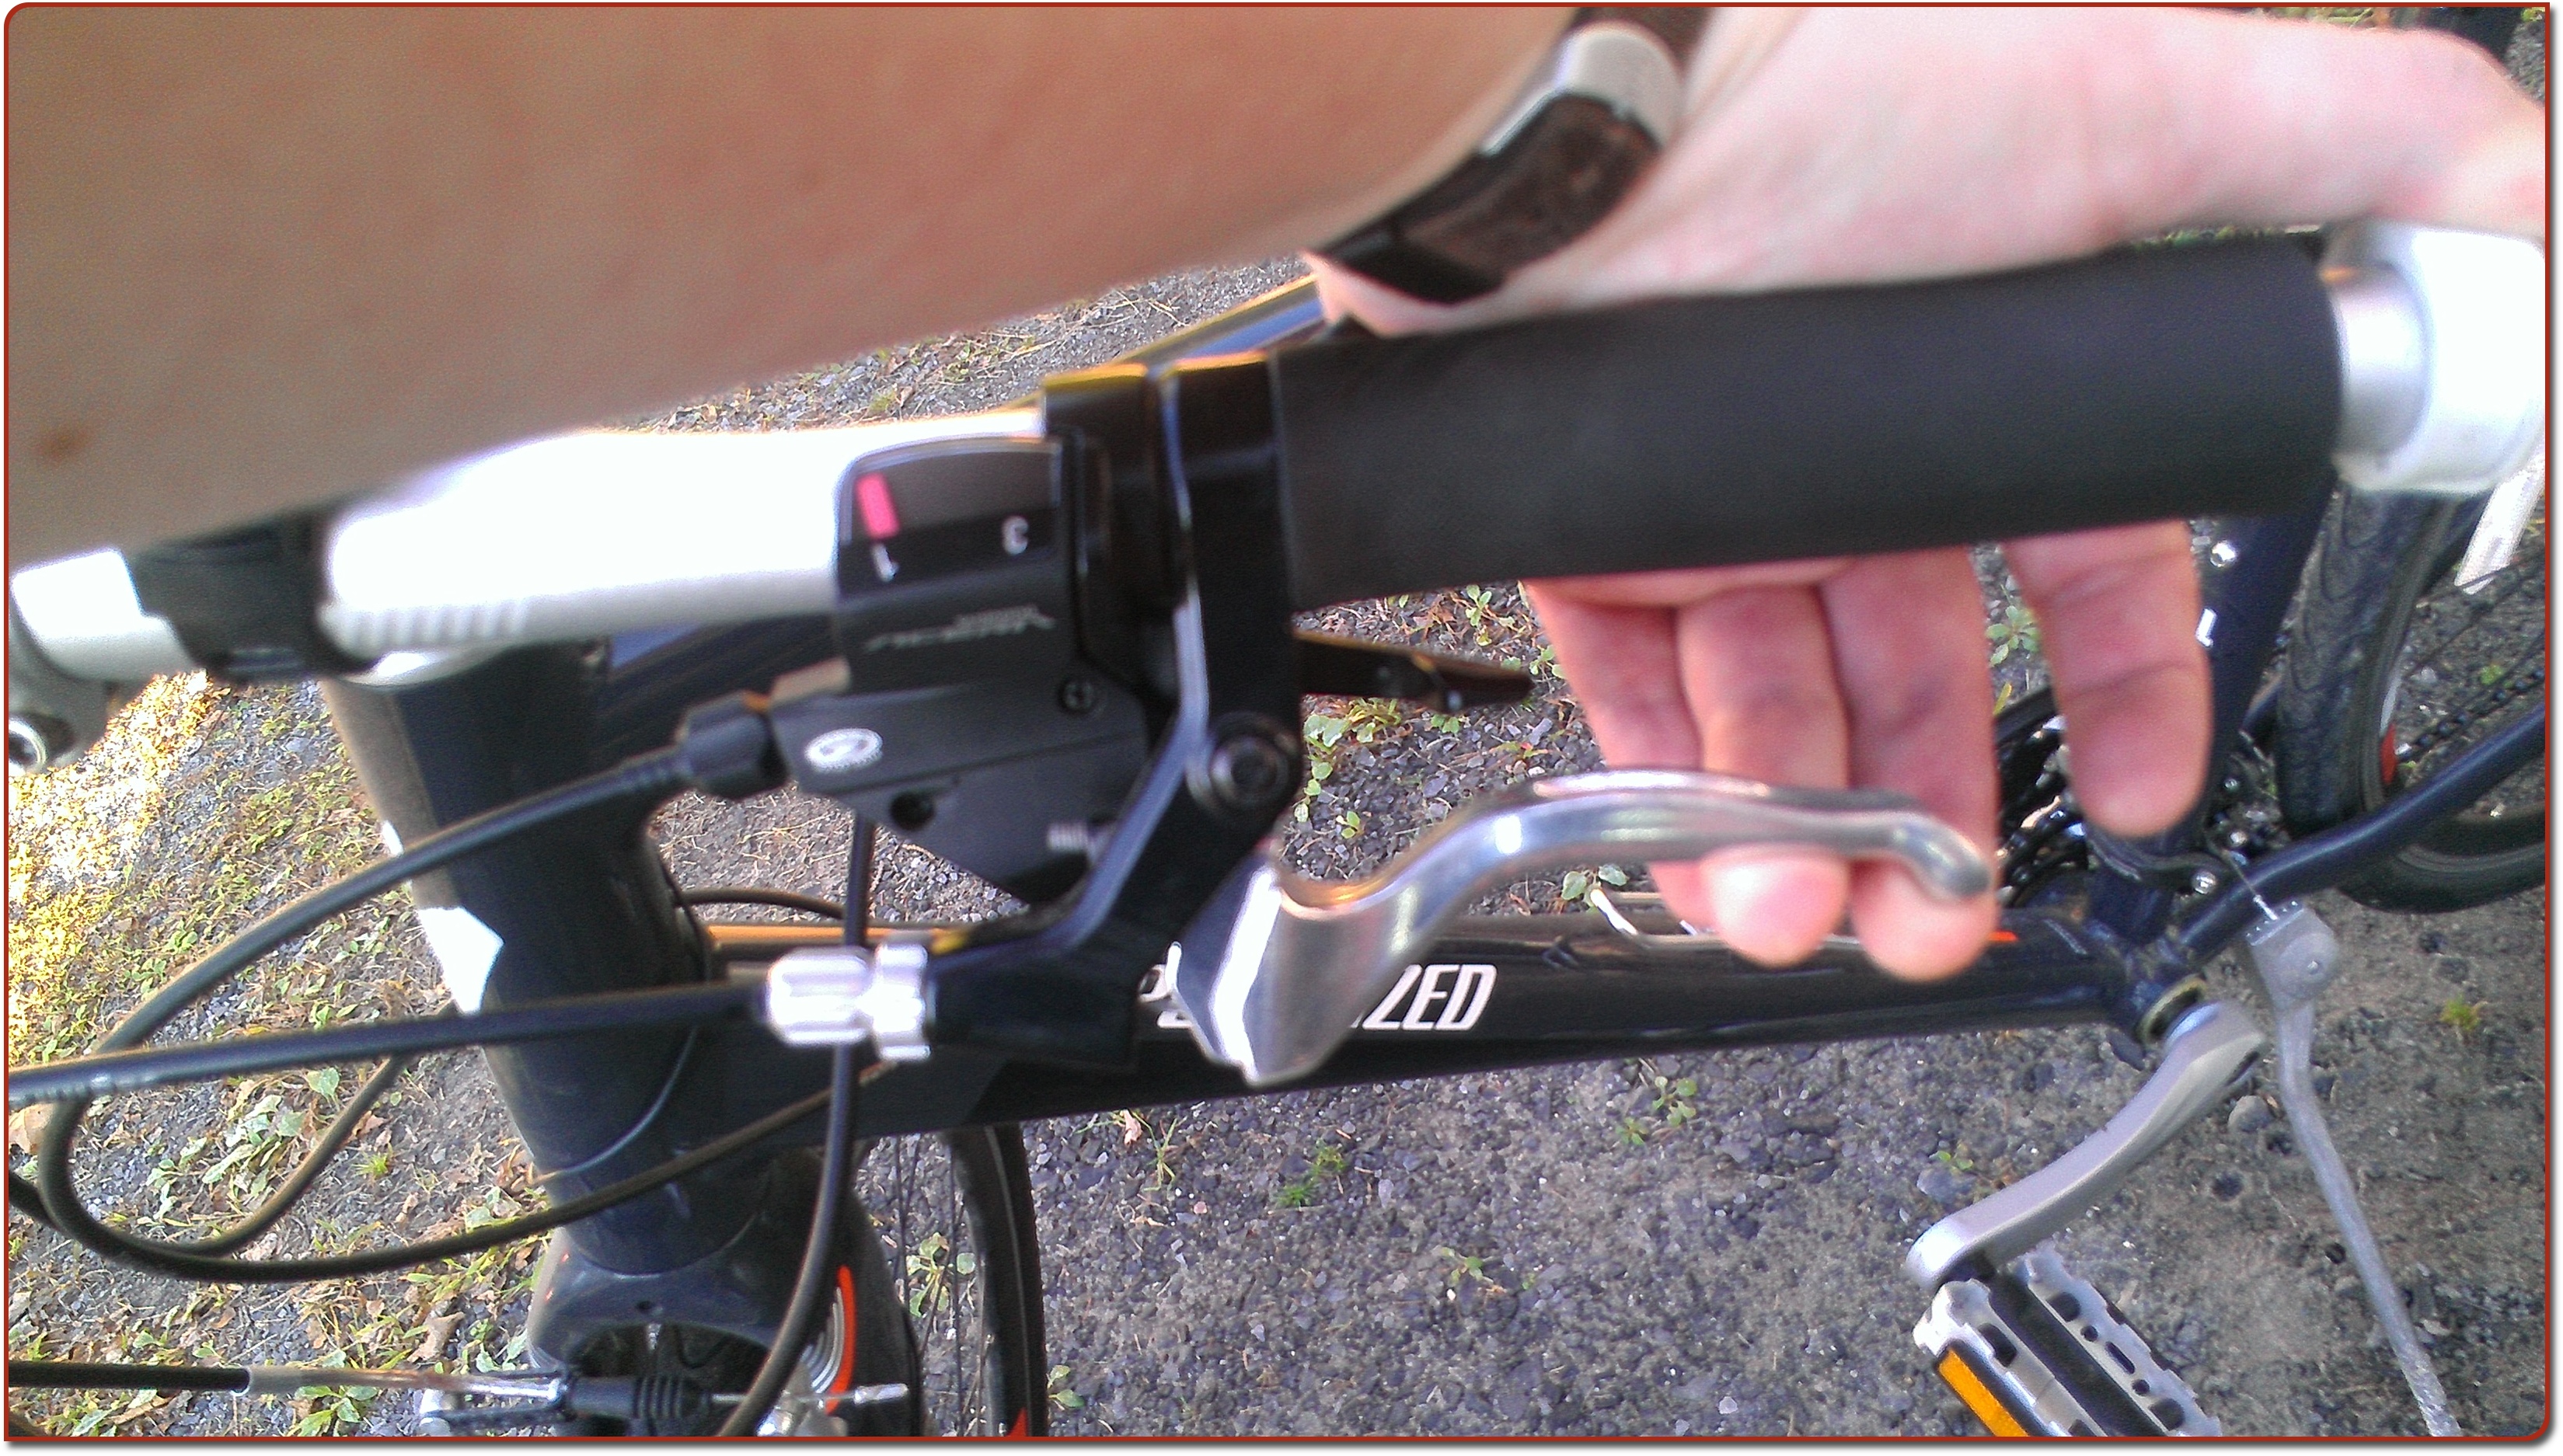 adjusting bike hand brakes